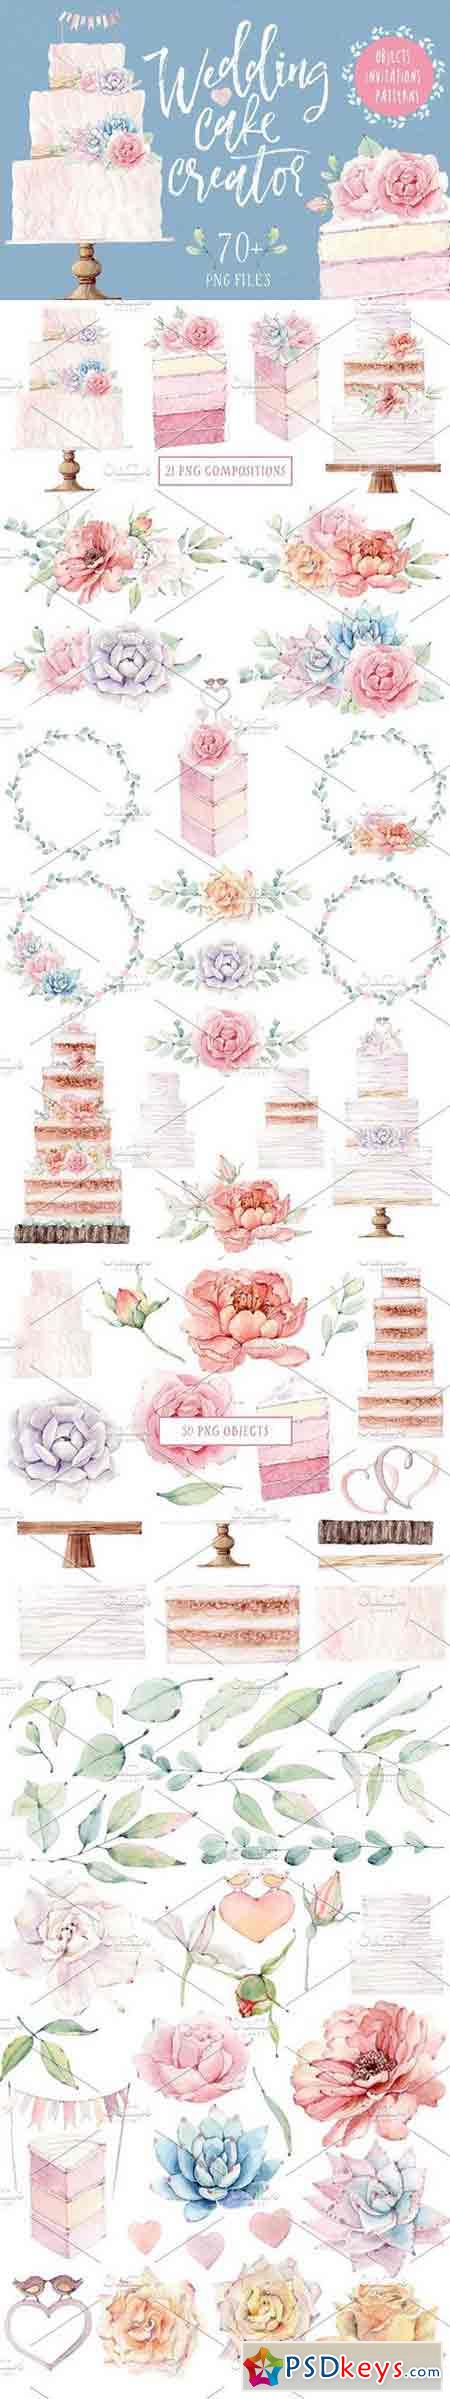 WEDDING CAKE CREATOR watercolor set 1490261